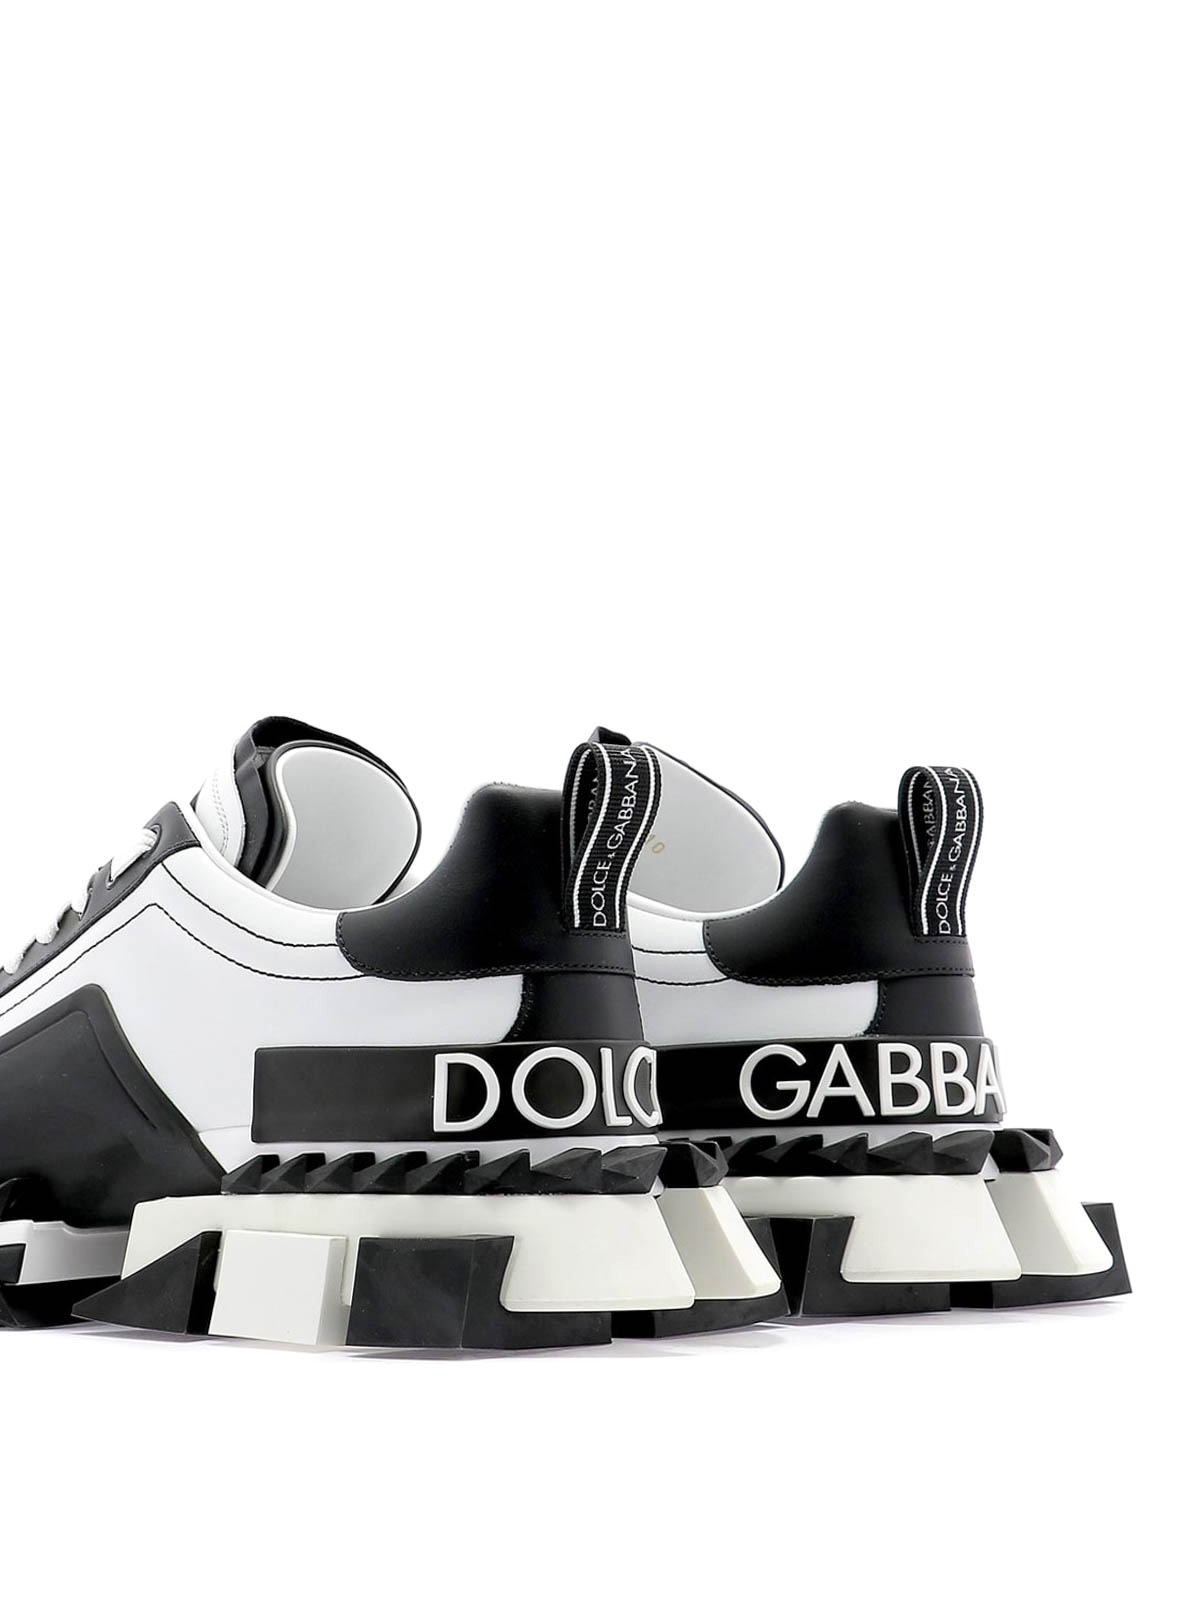 Dolce &Gabbana スーパーキング スニーカー smcint.com